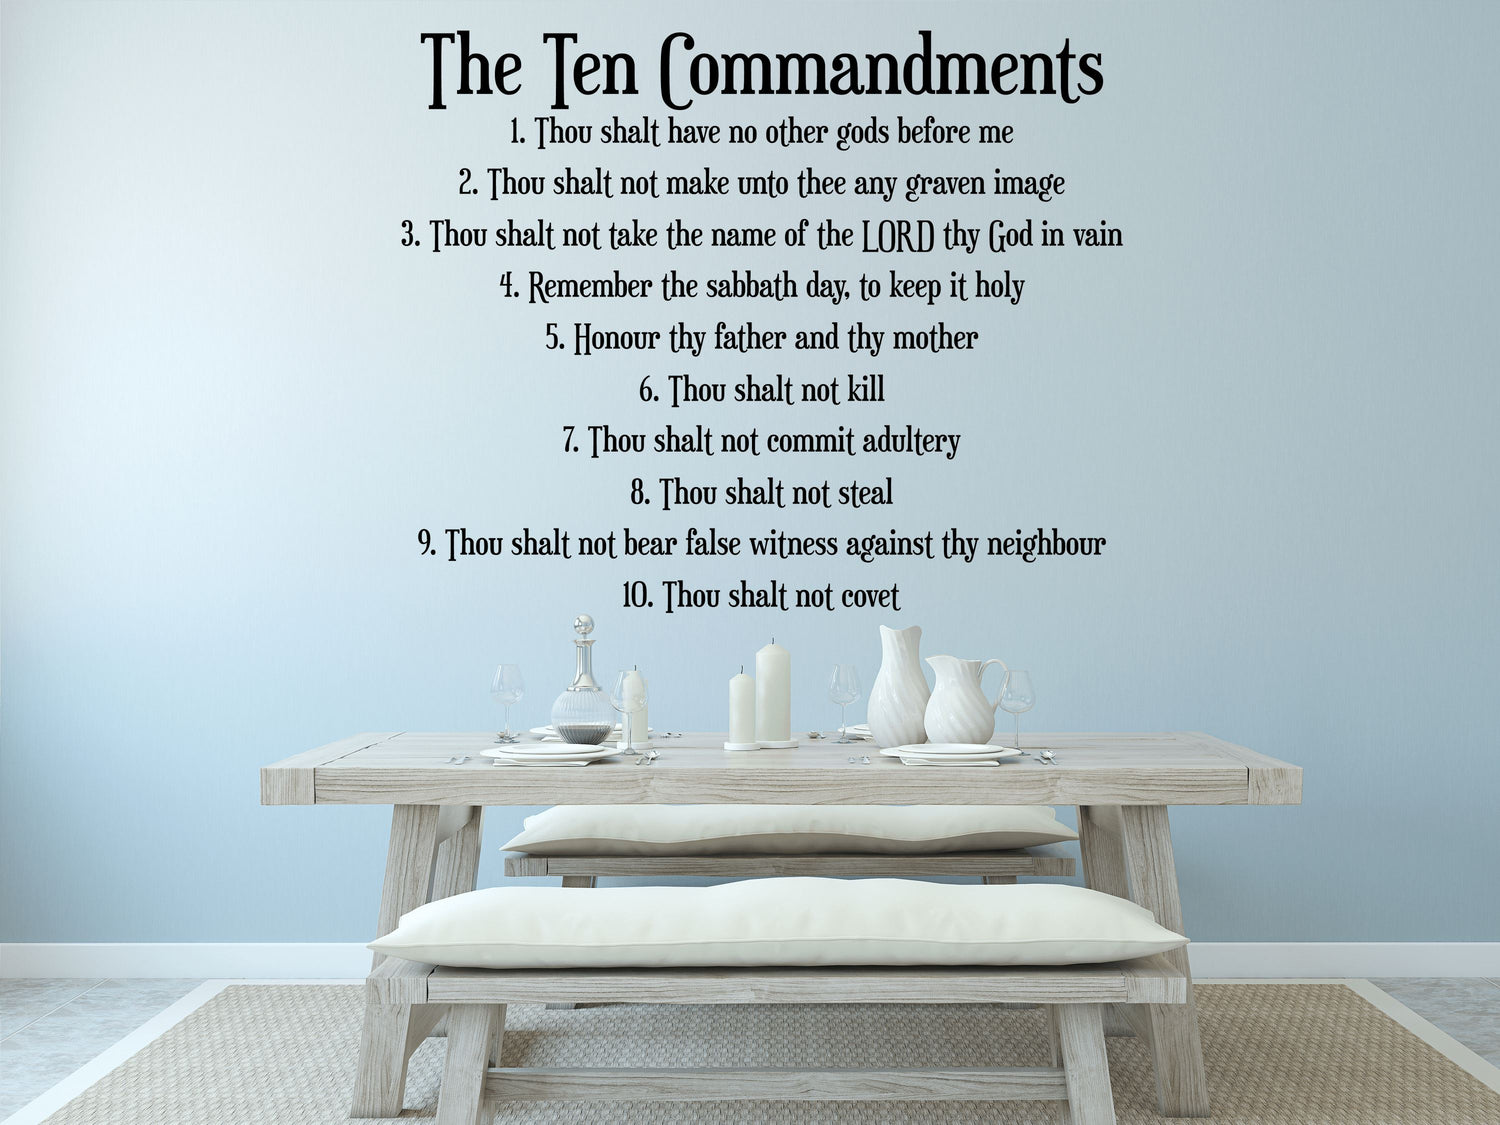 The 10 Commandments - Inspirational Wall Signs Inspirational Wall Signs 